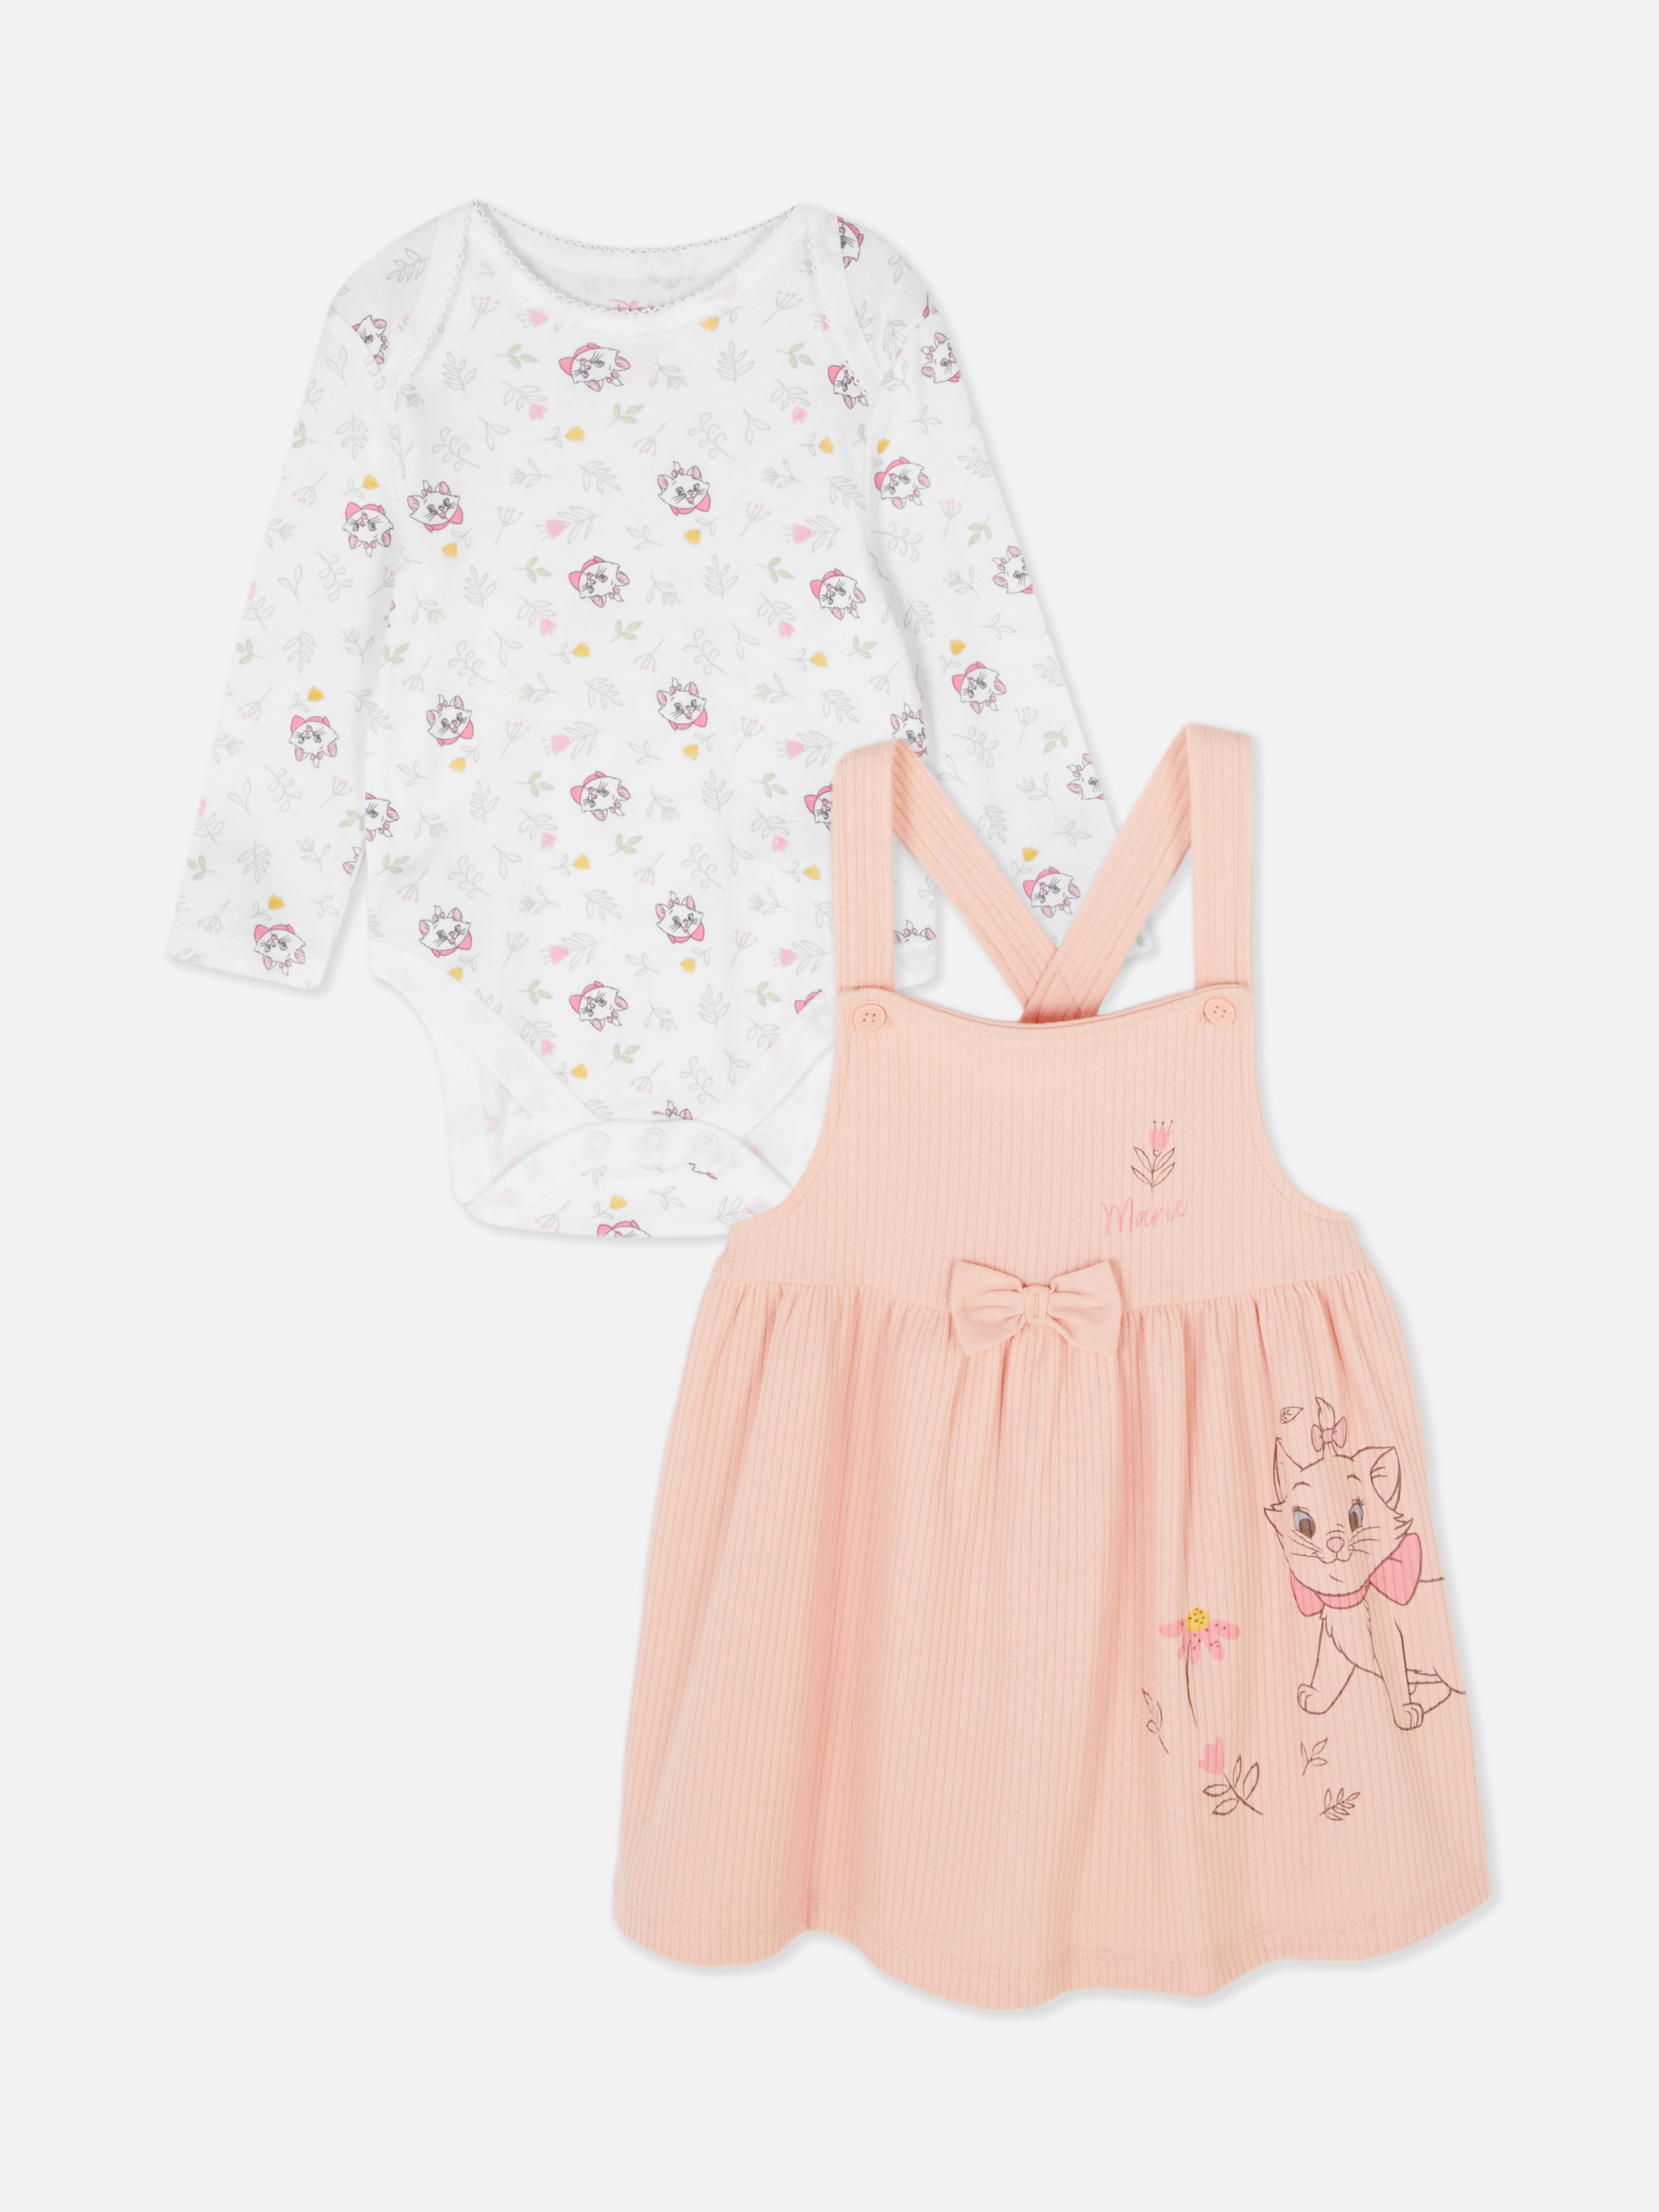 Disney’s The Aristocats Bodysuit and Dress Set